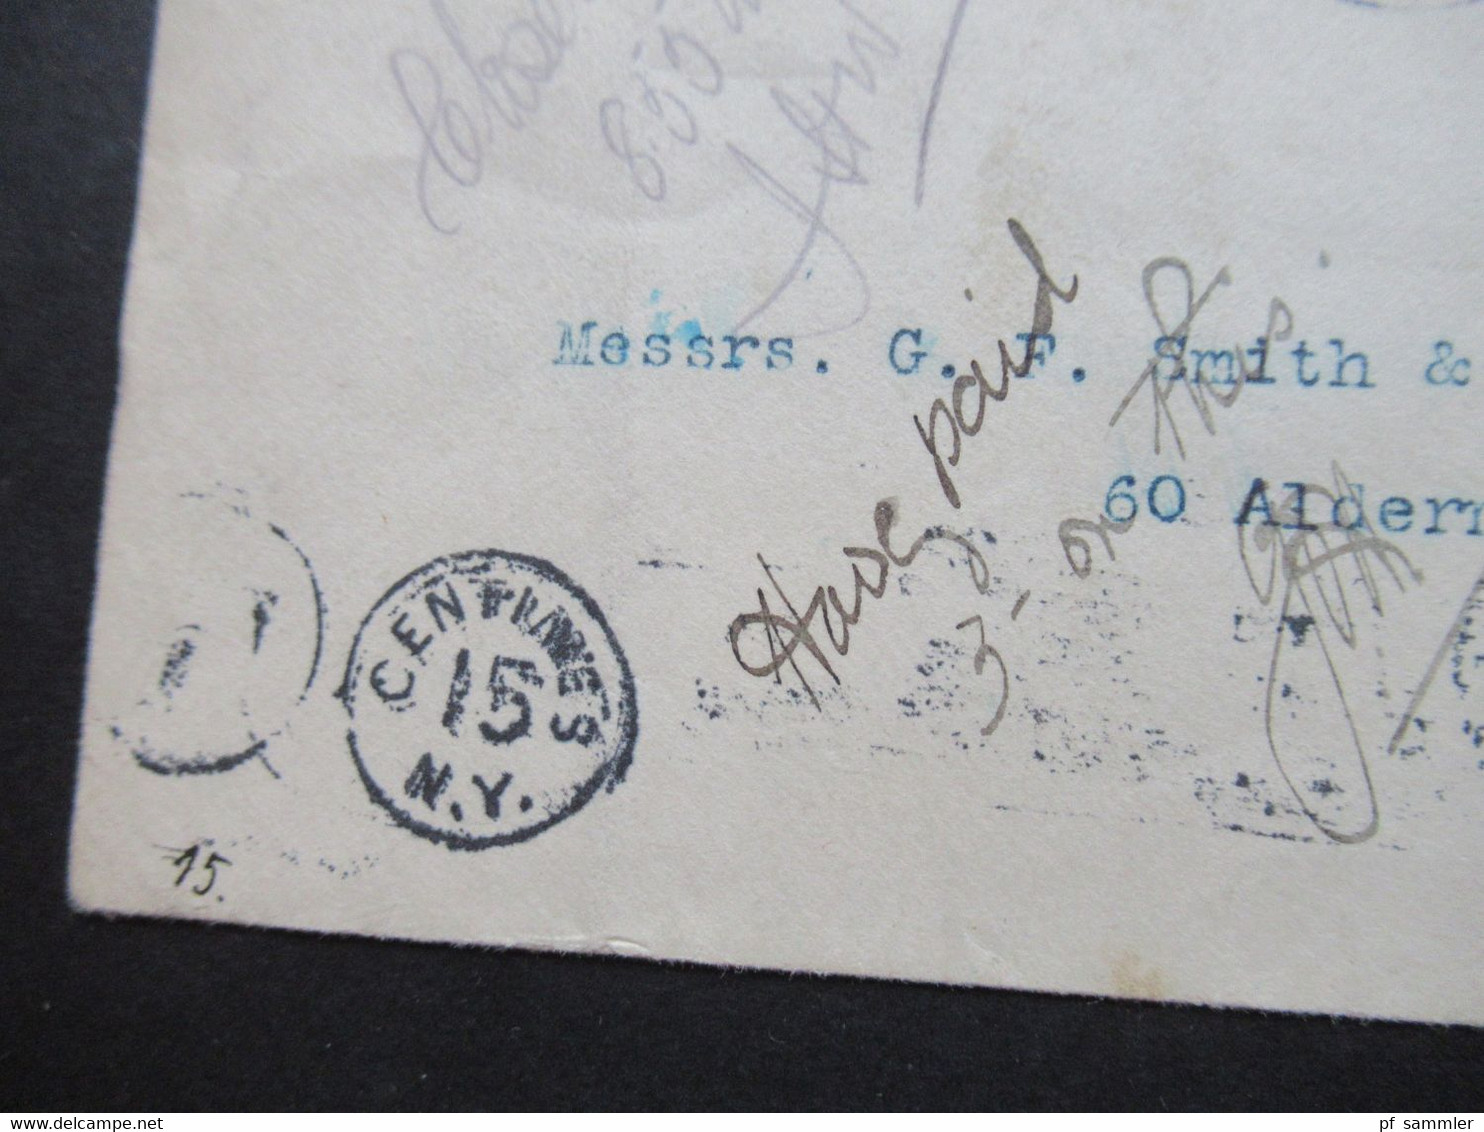 USA 1905 GA Umschlag Mit Fahnenstempel Washington DC Station A Und 3 F.B.B. Stempel Nach London / Nachporto - Lettres & Documents